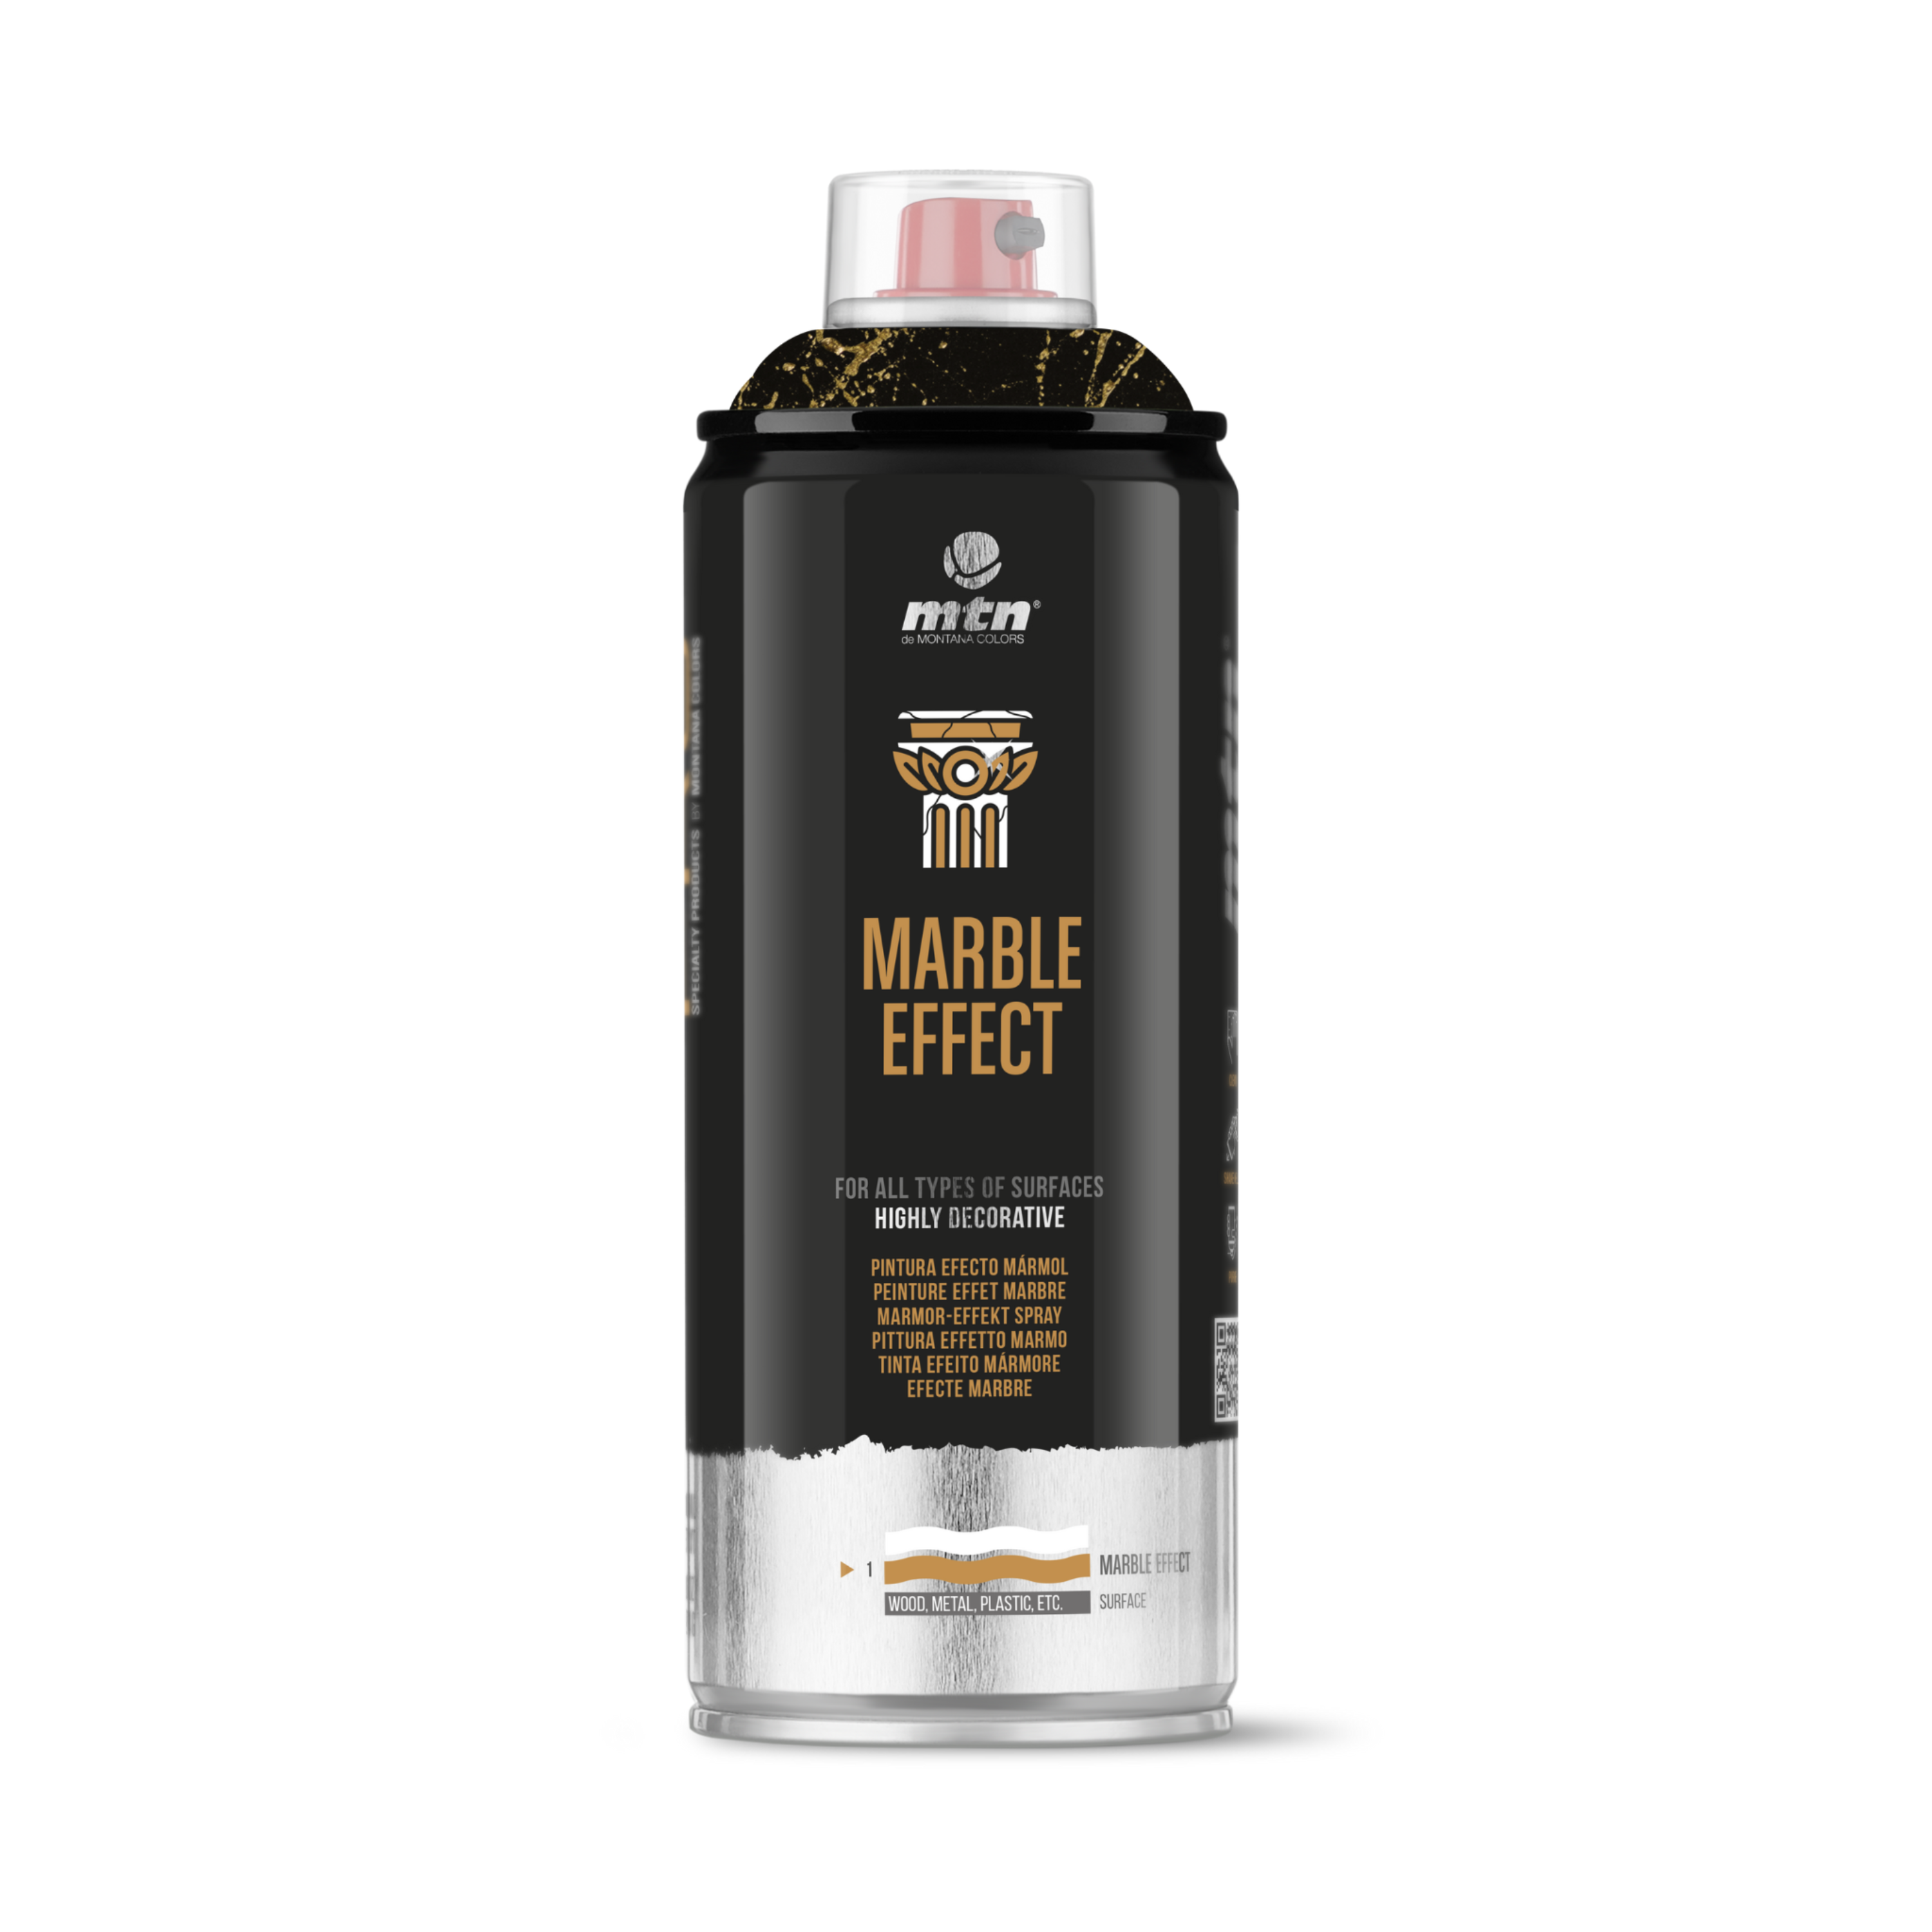 Montana-Cans Montana Marble Effect Spray, Yellow - 400ml Spray Can